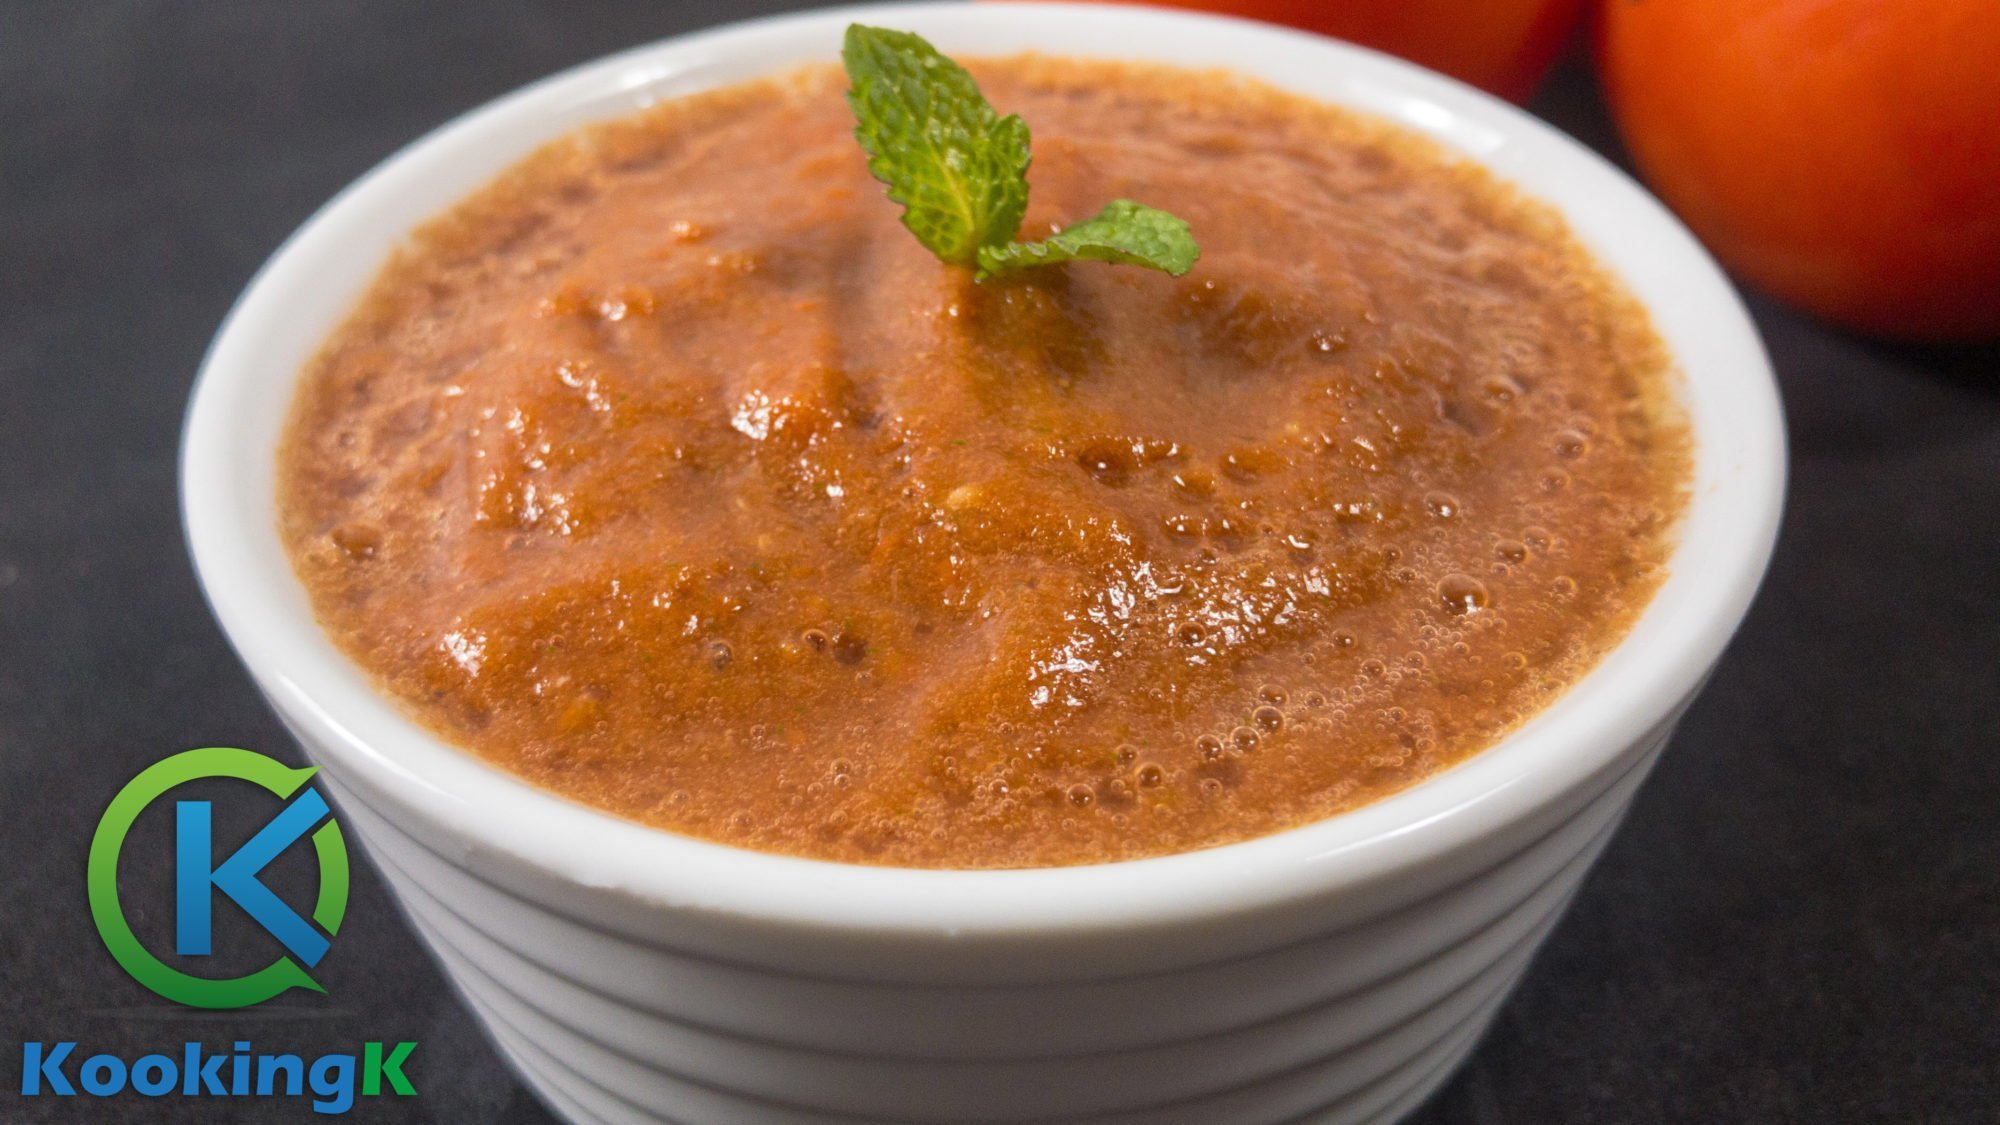 Dakoos Recipe - Tomato Sauce for Arabic Rice Recipe by KooKingK